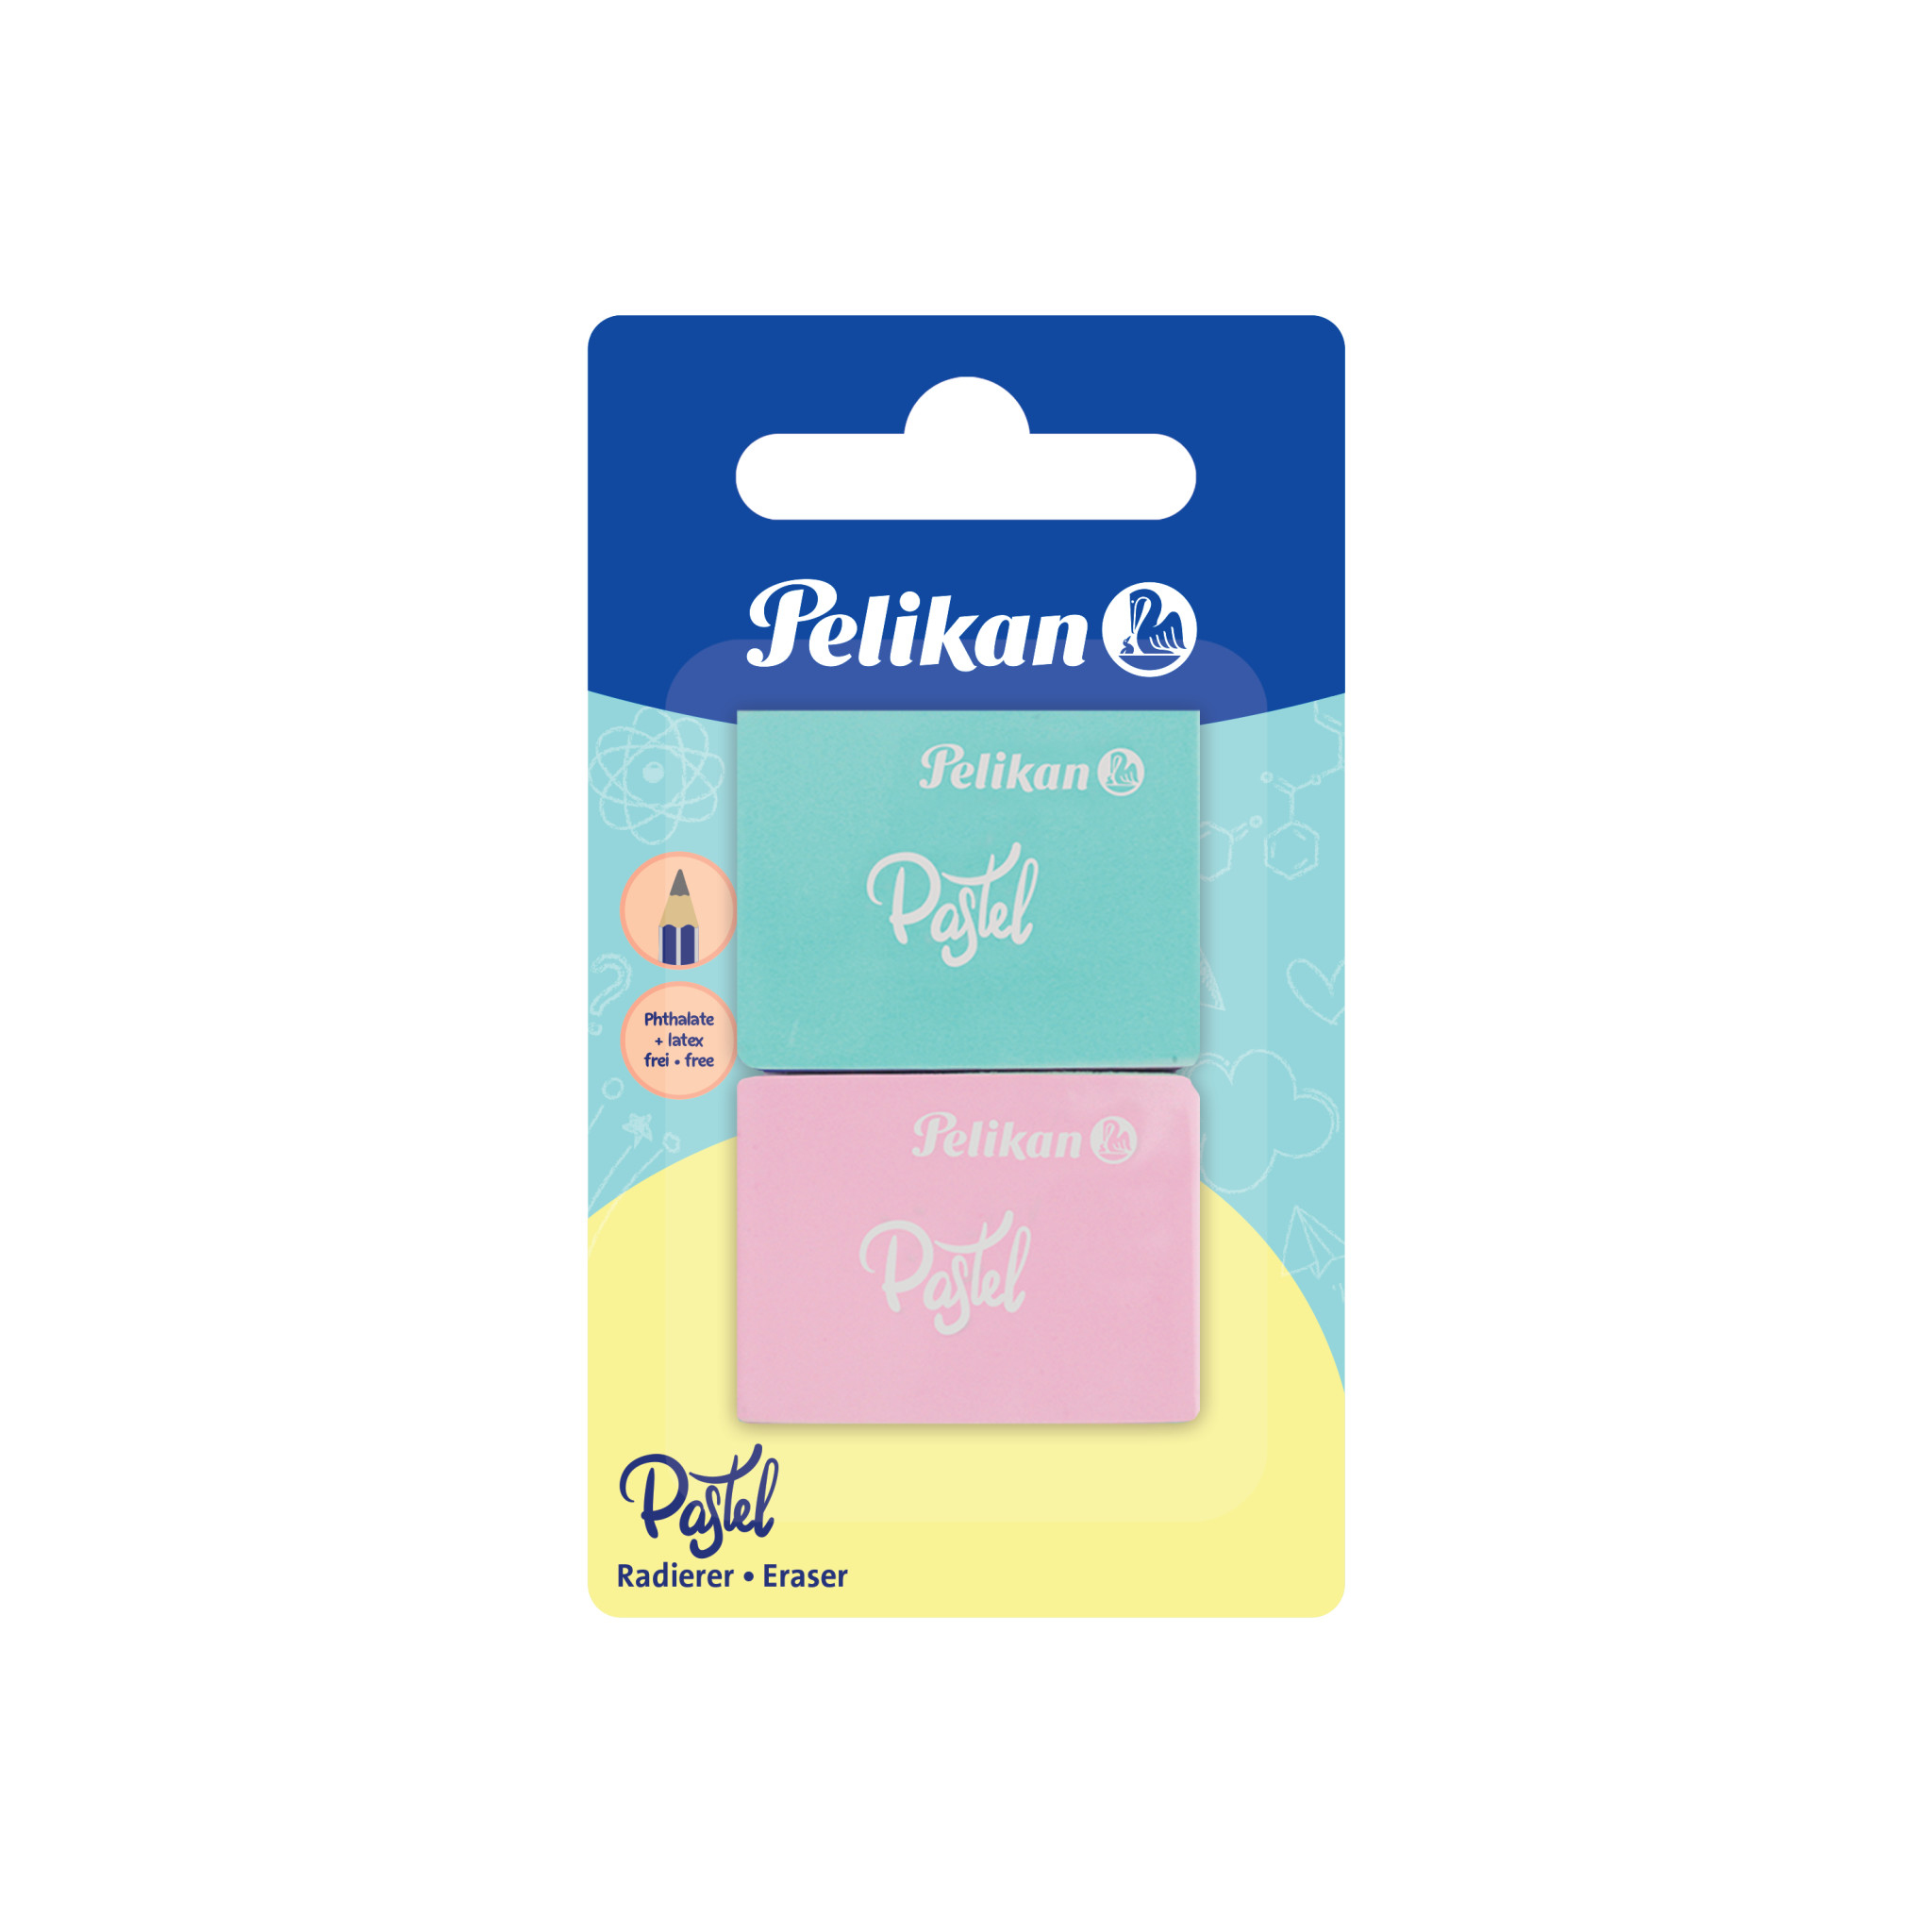 Pelikan 818100 - Gummi - Aqua-Farbe - Pink - Sichtverpackung - 2 Stück(e)